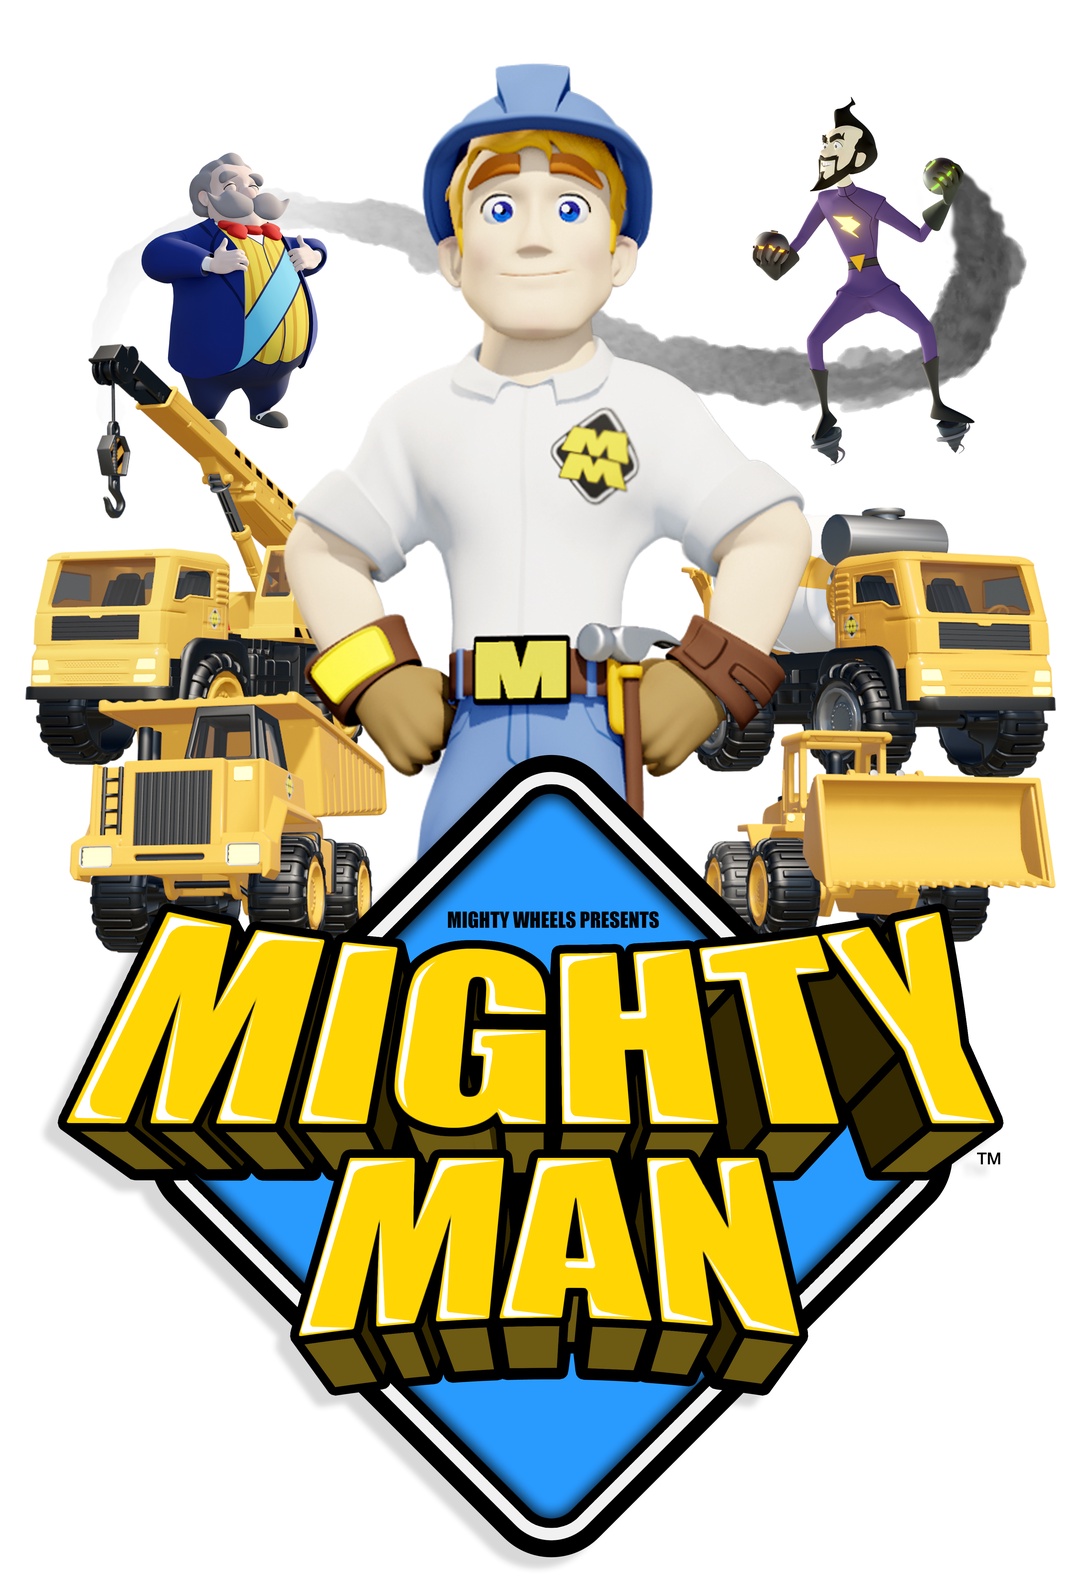 Mighty Man